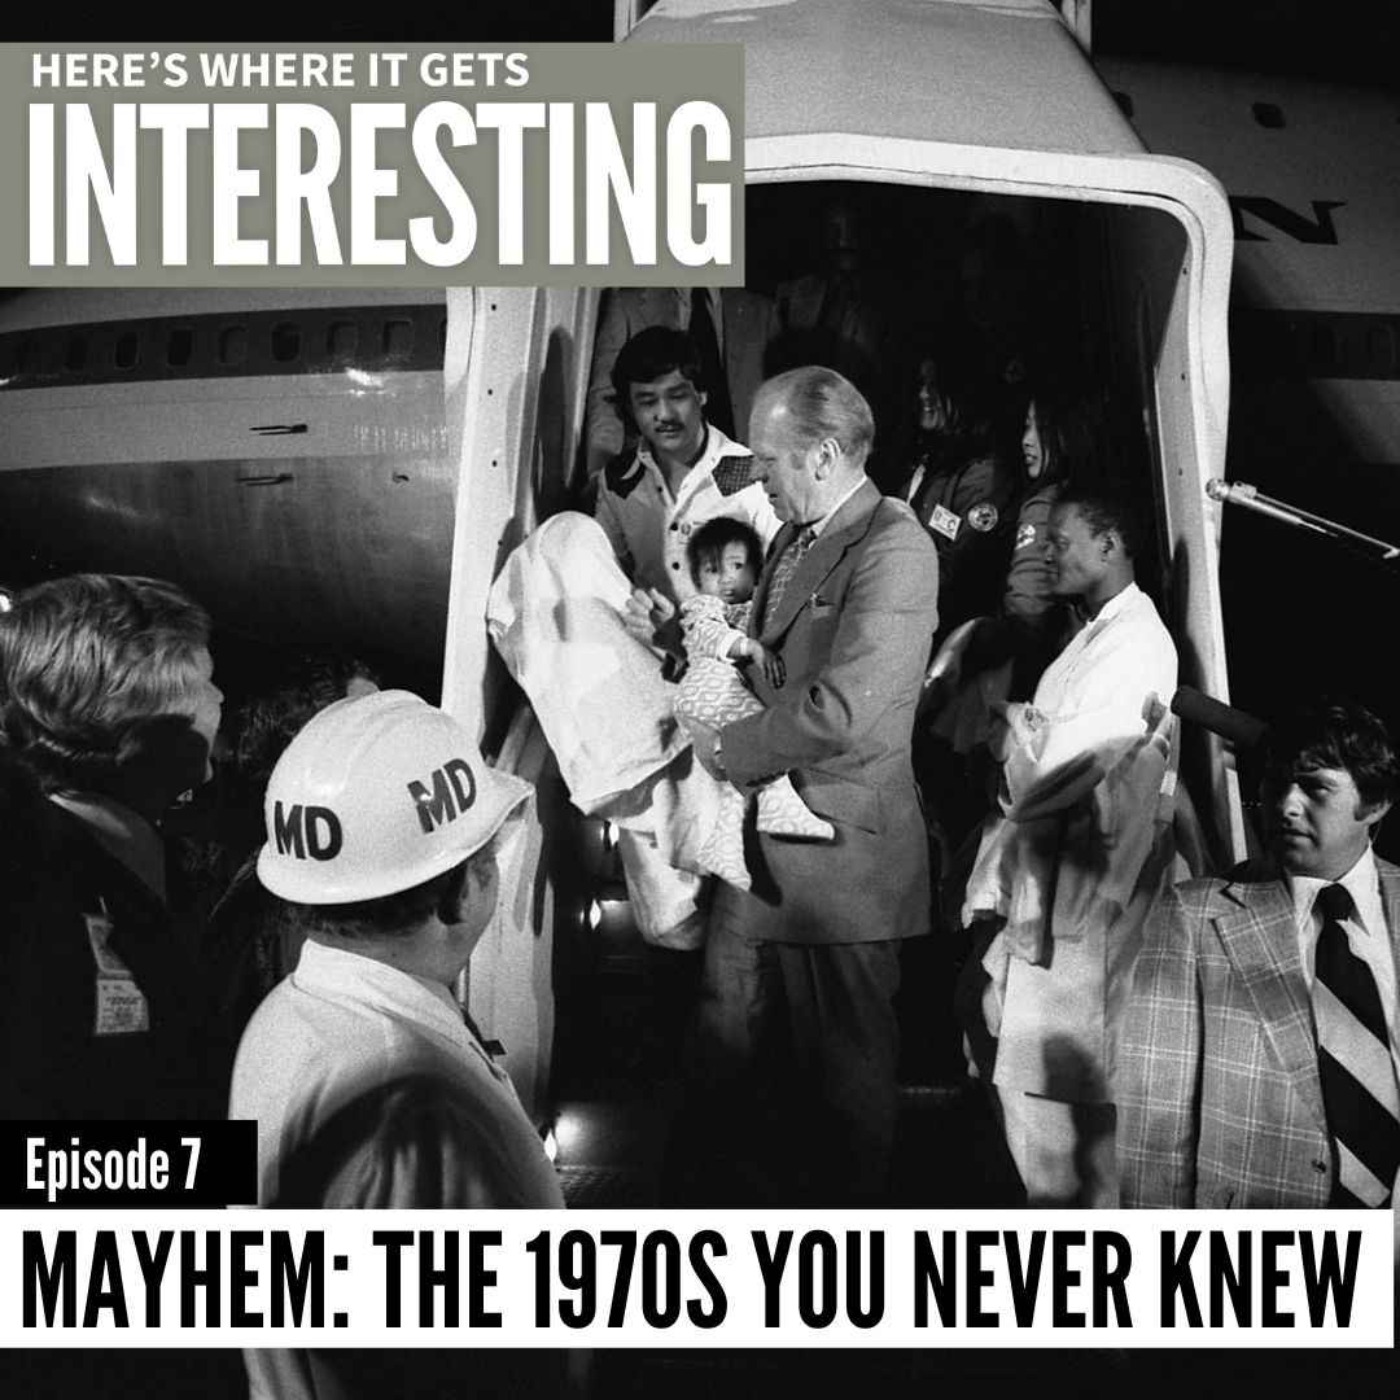 Mayhem: The 1970s You Never Knew, Episode 7